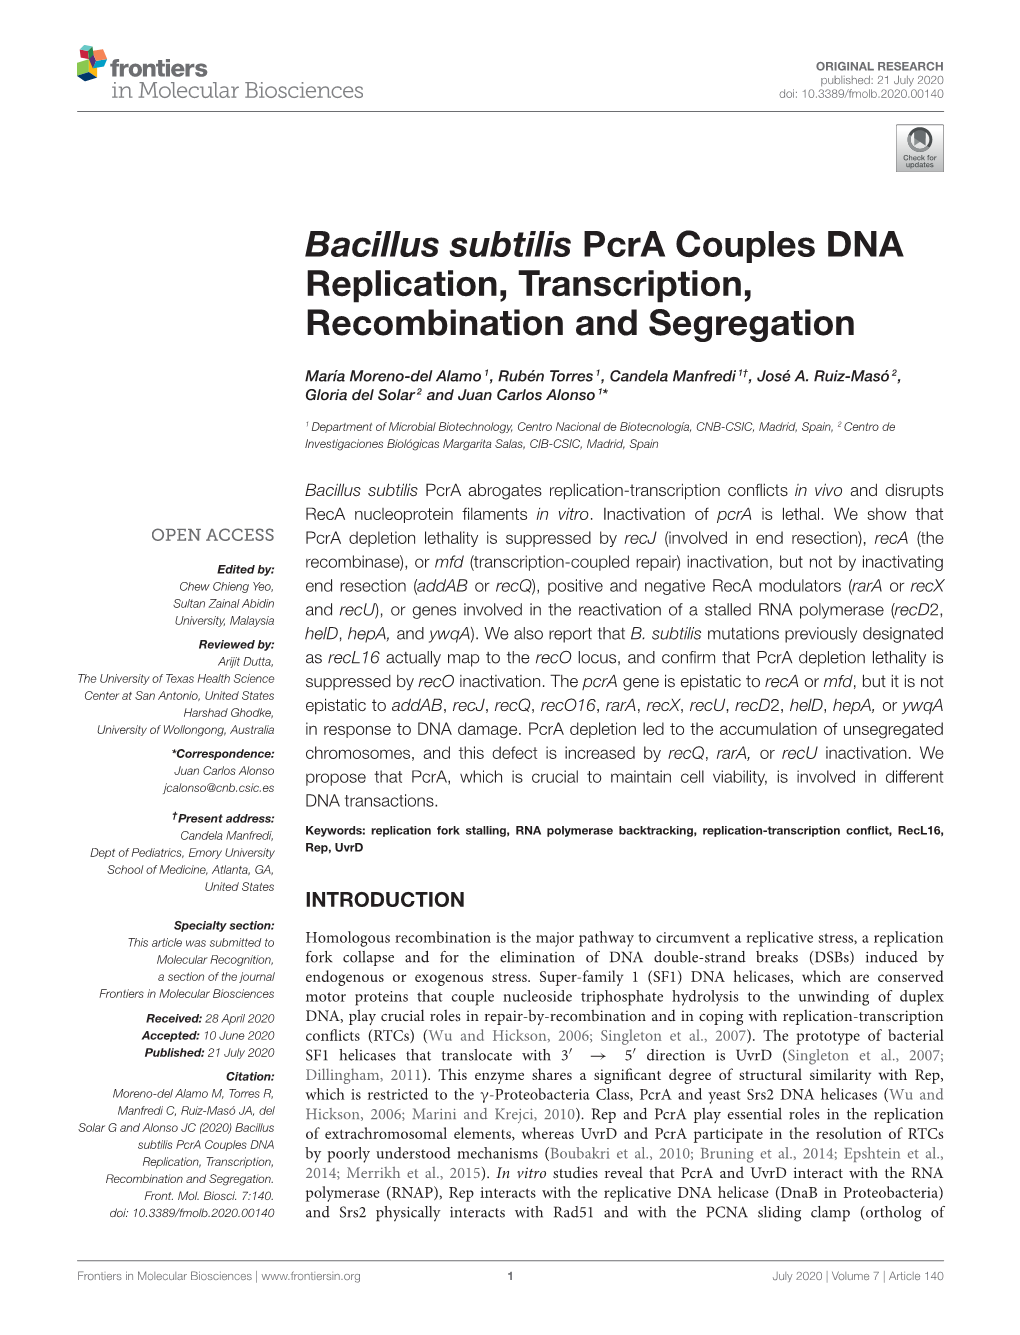 Bacillus Subtilis Pcra Couples DNA Replication, Transcription, Recombination and Segregation